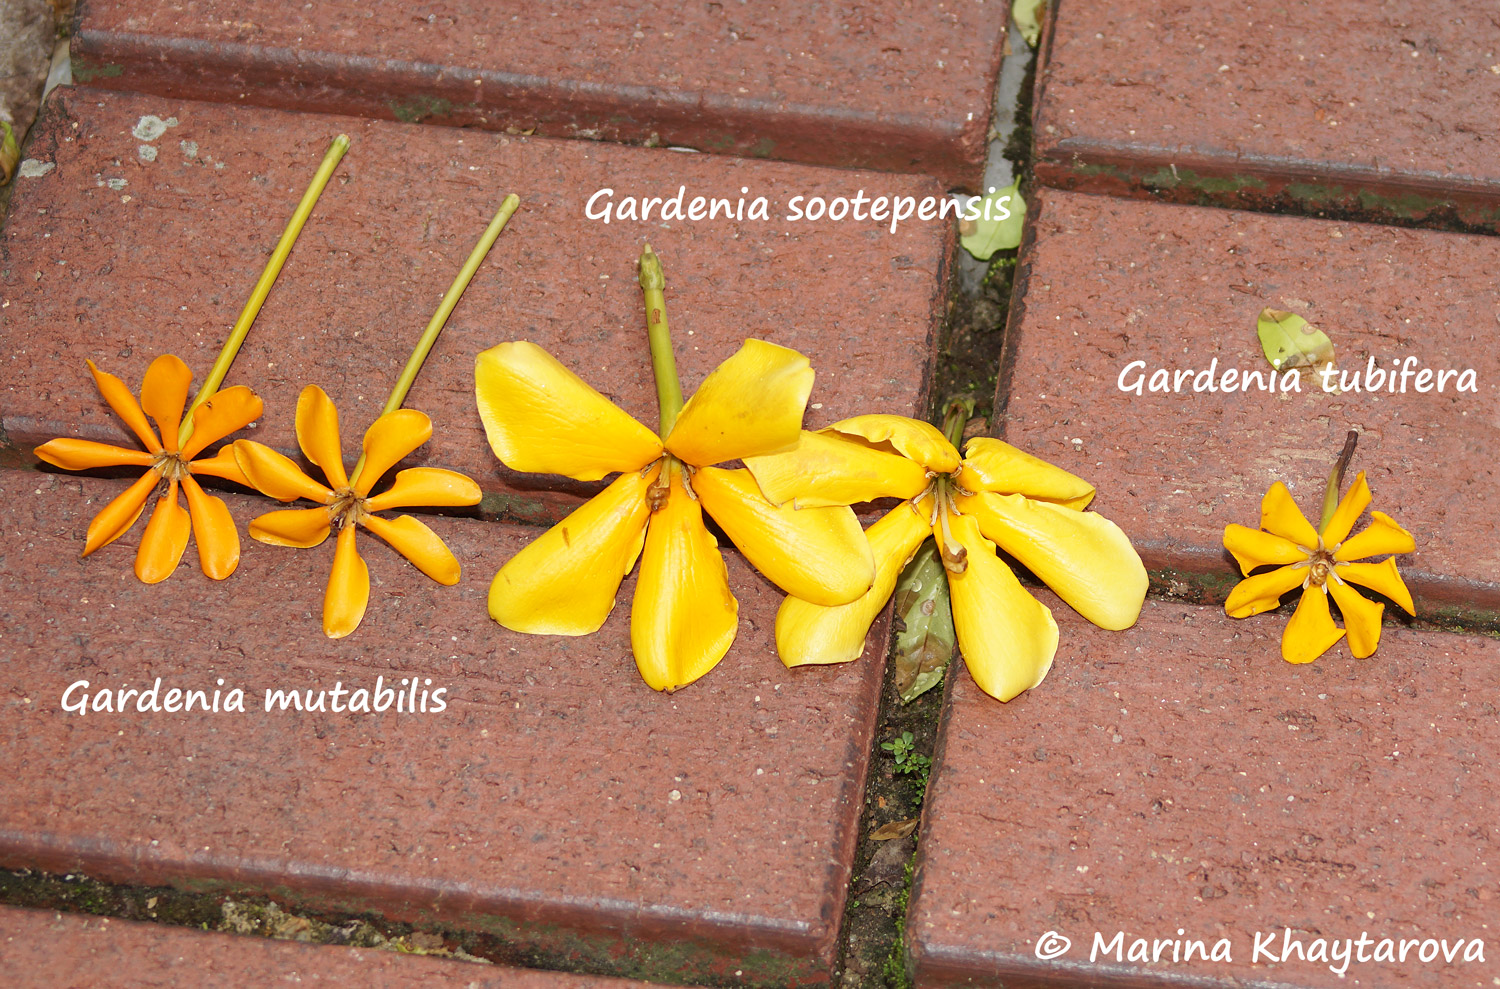 Gardenia sootepensis